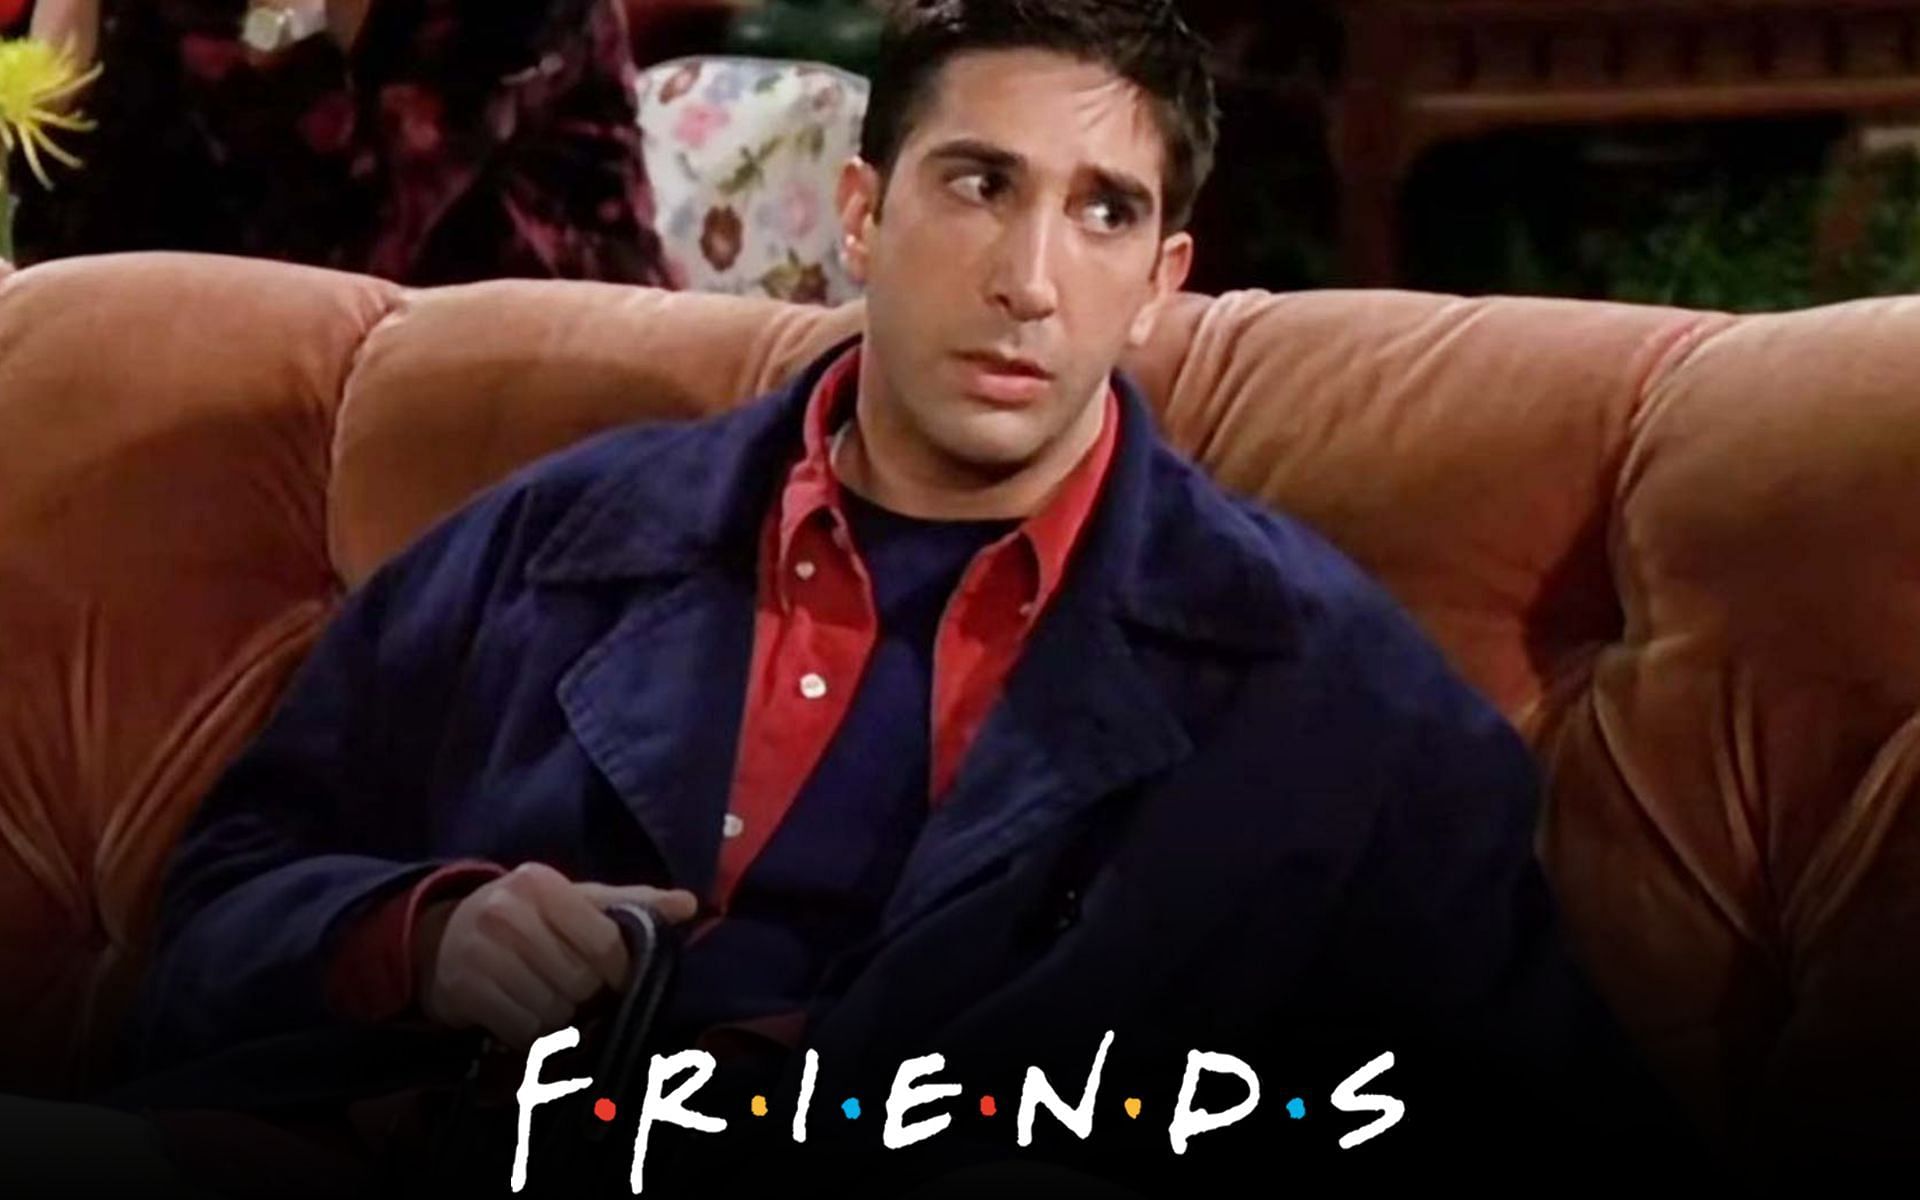 Ross Geller in Friends (Image via Sportskeeda)